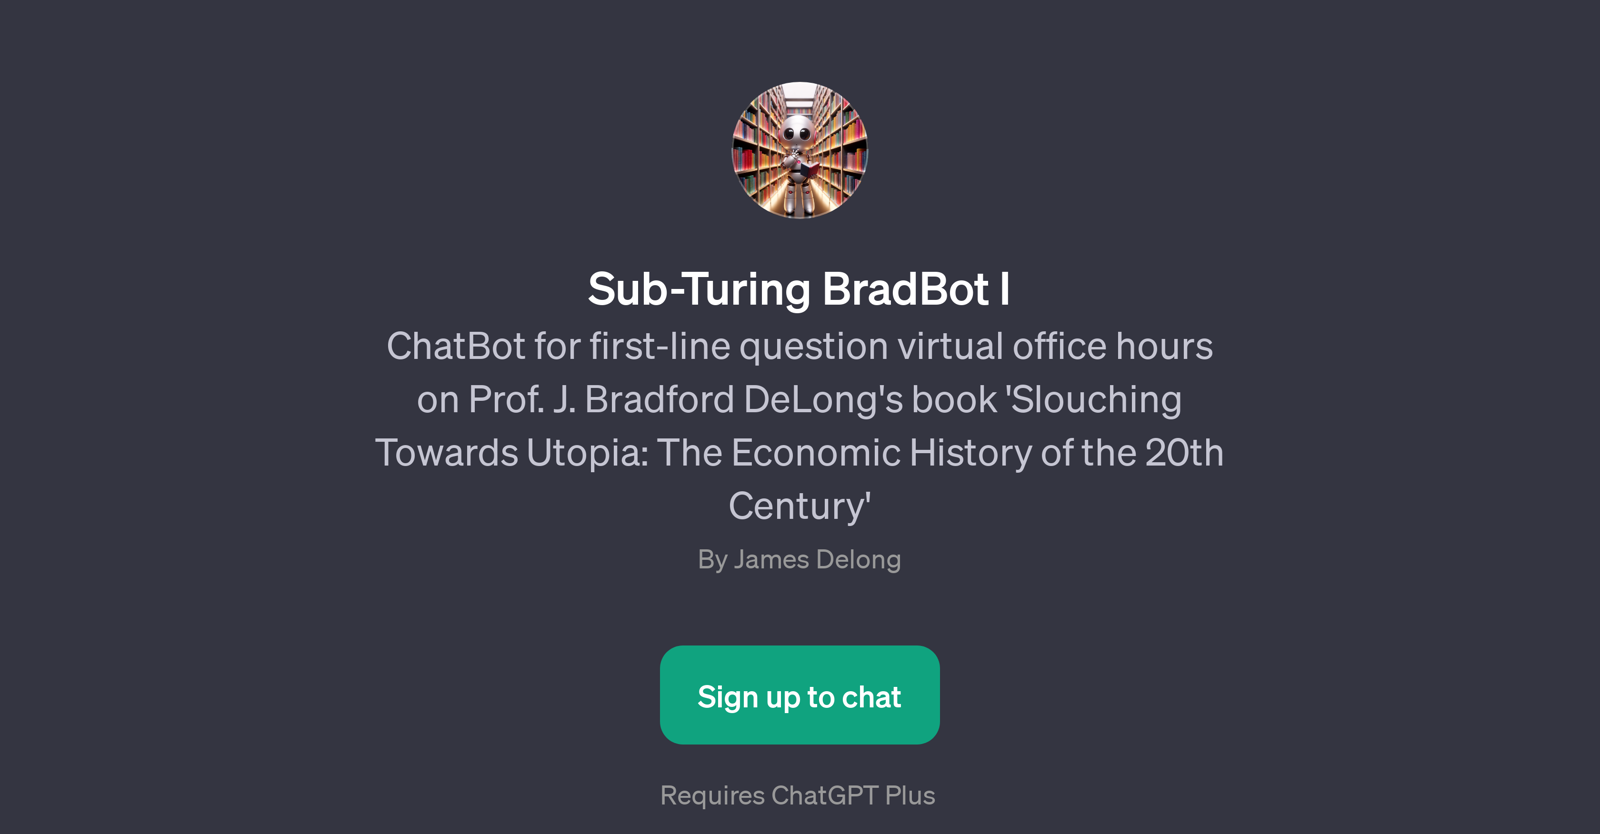 Sub-Turing BradBot I website